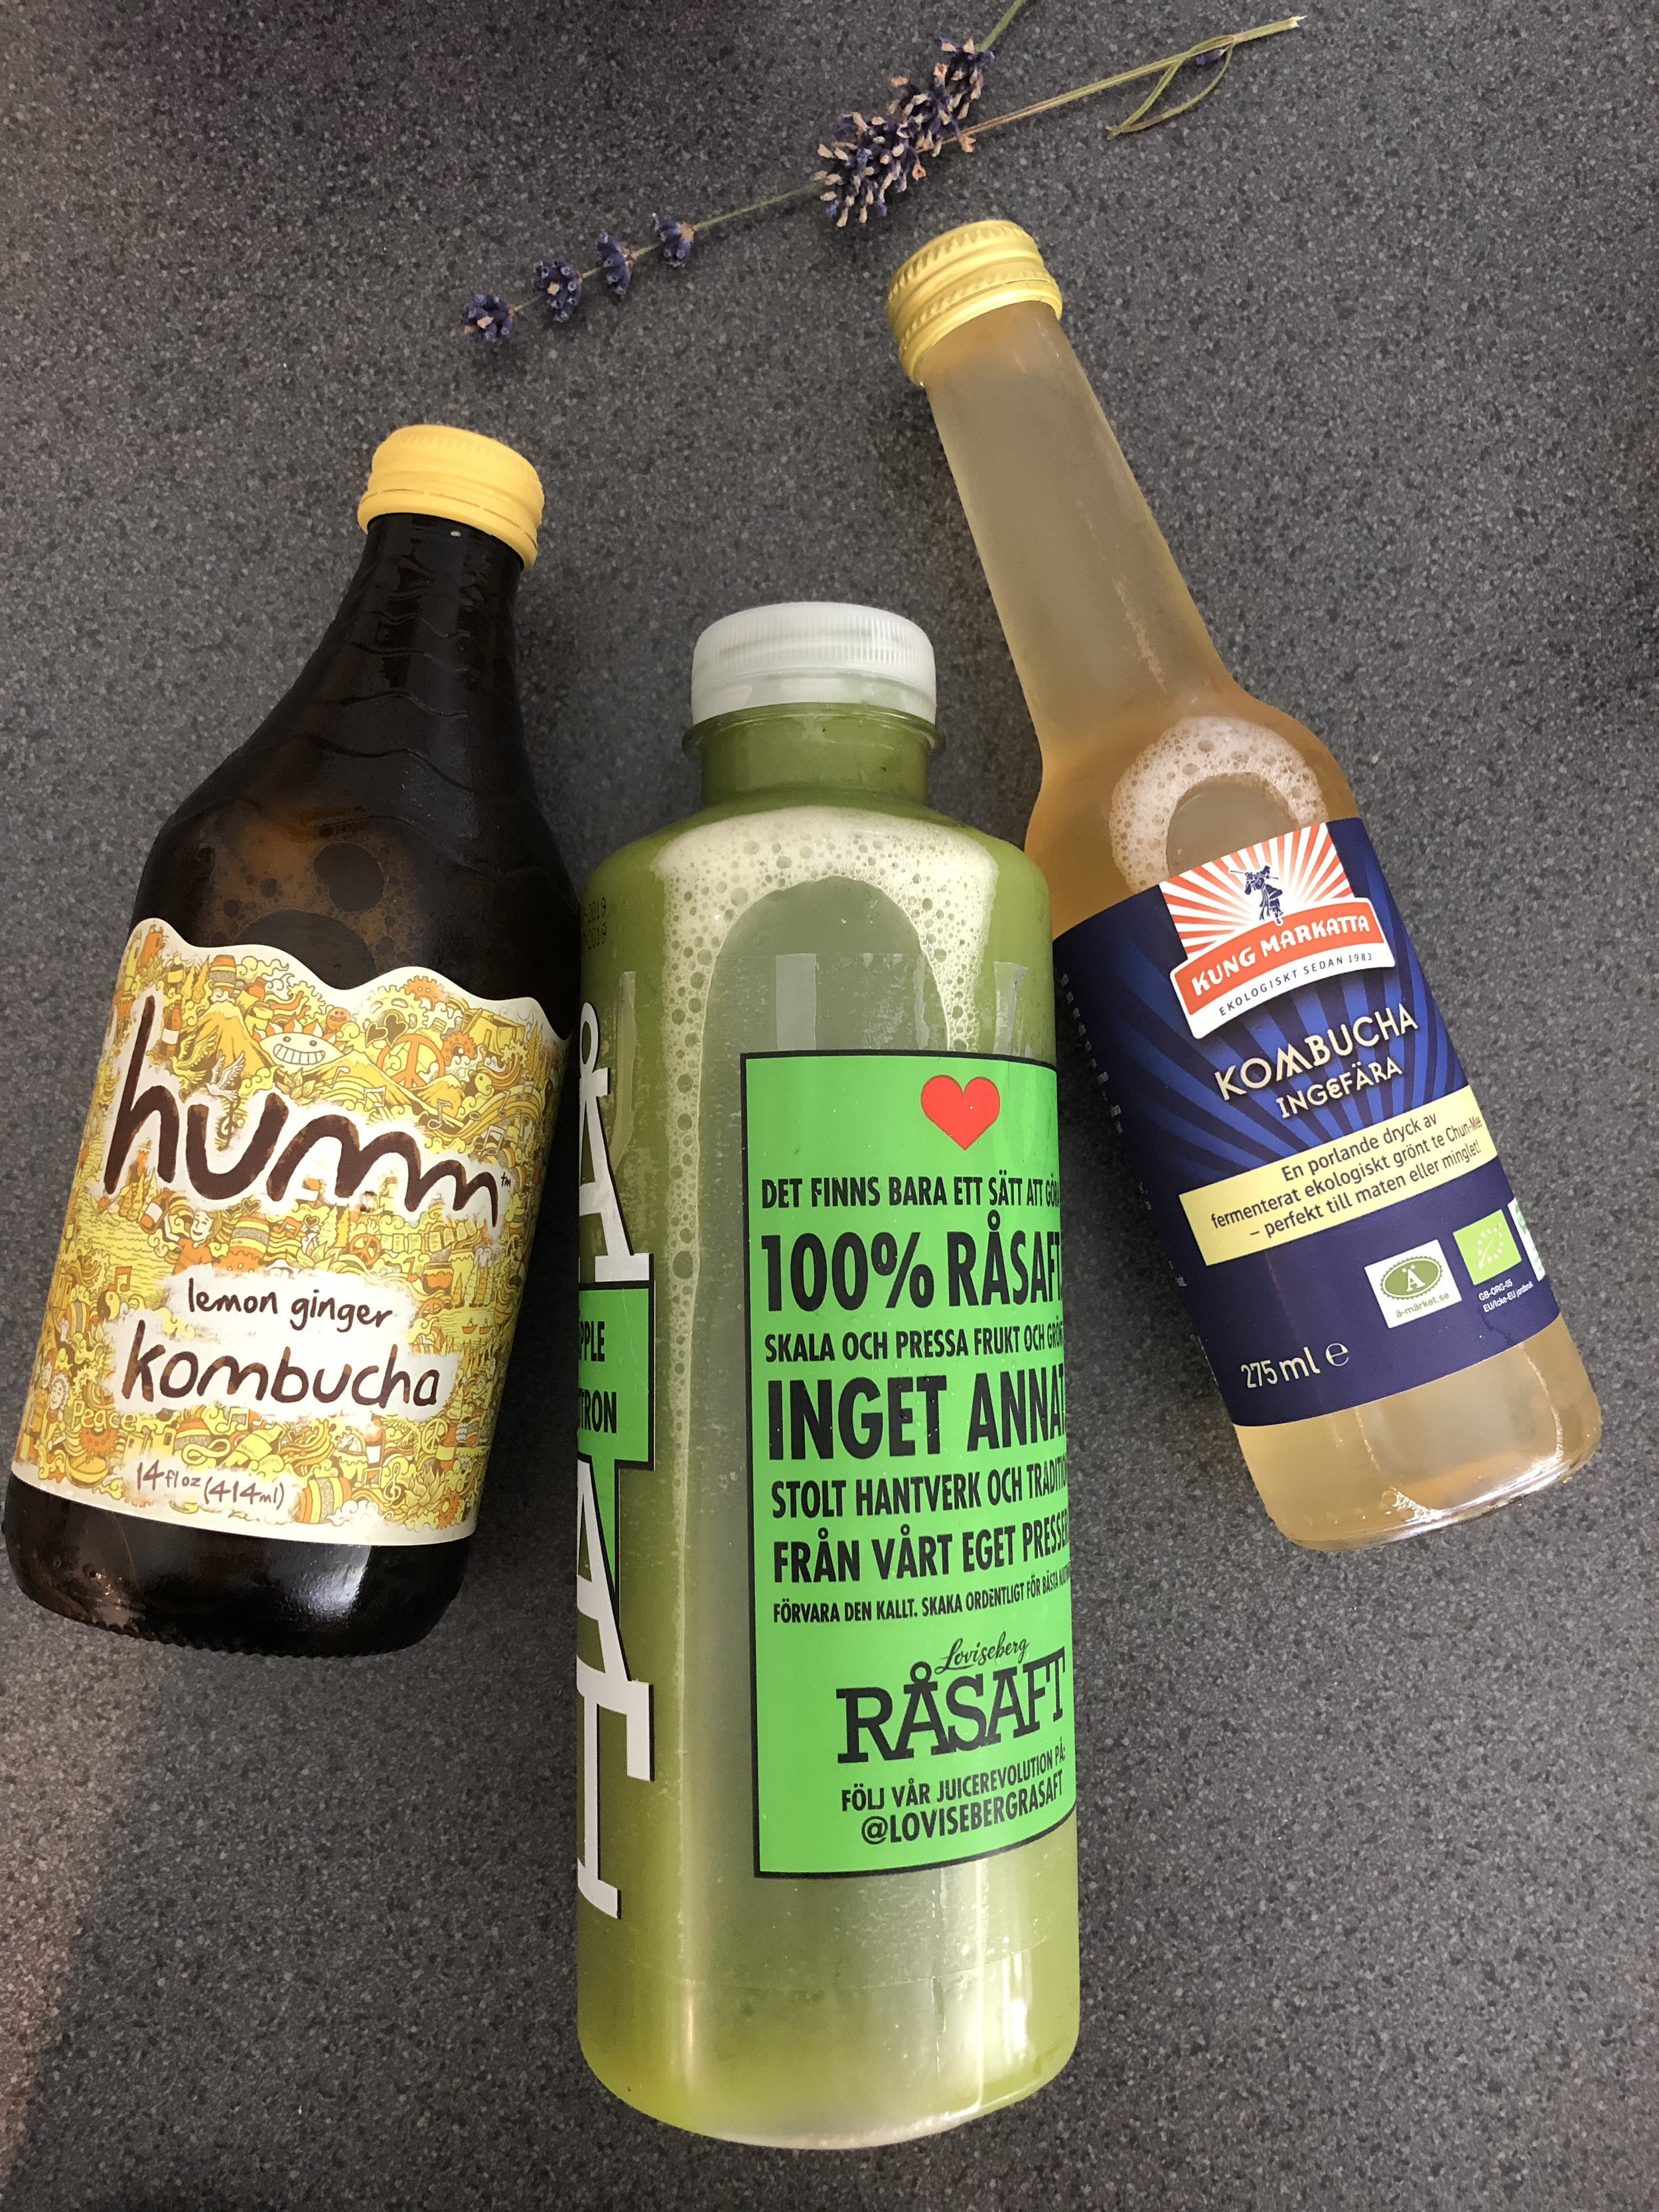 more kombucha &amp; a green juice